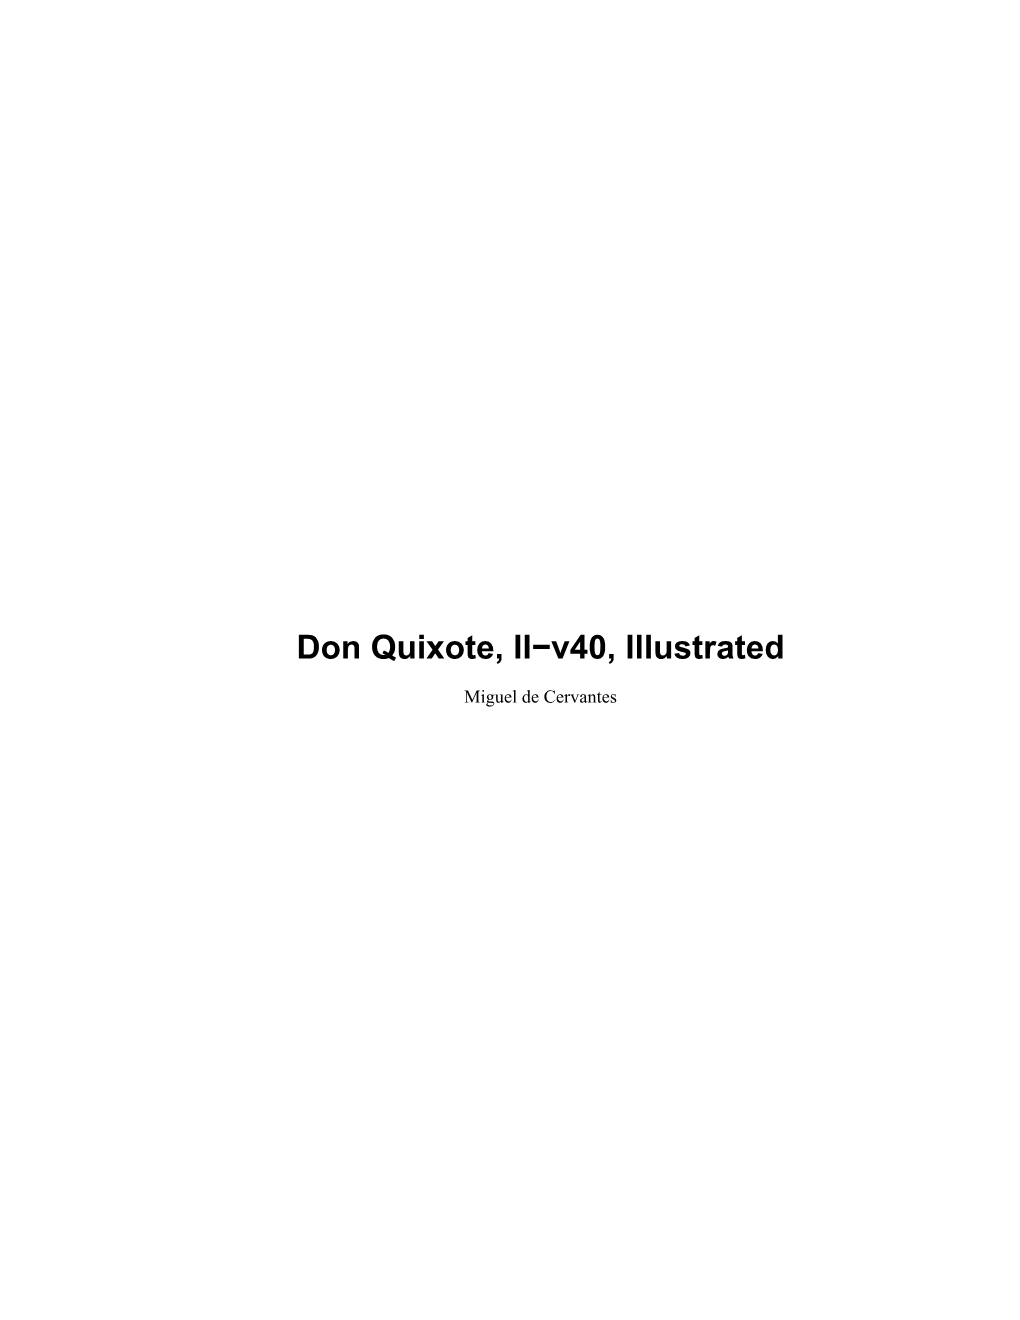 Don Quixote, II-V40, Illustrated